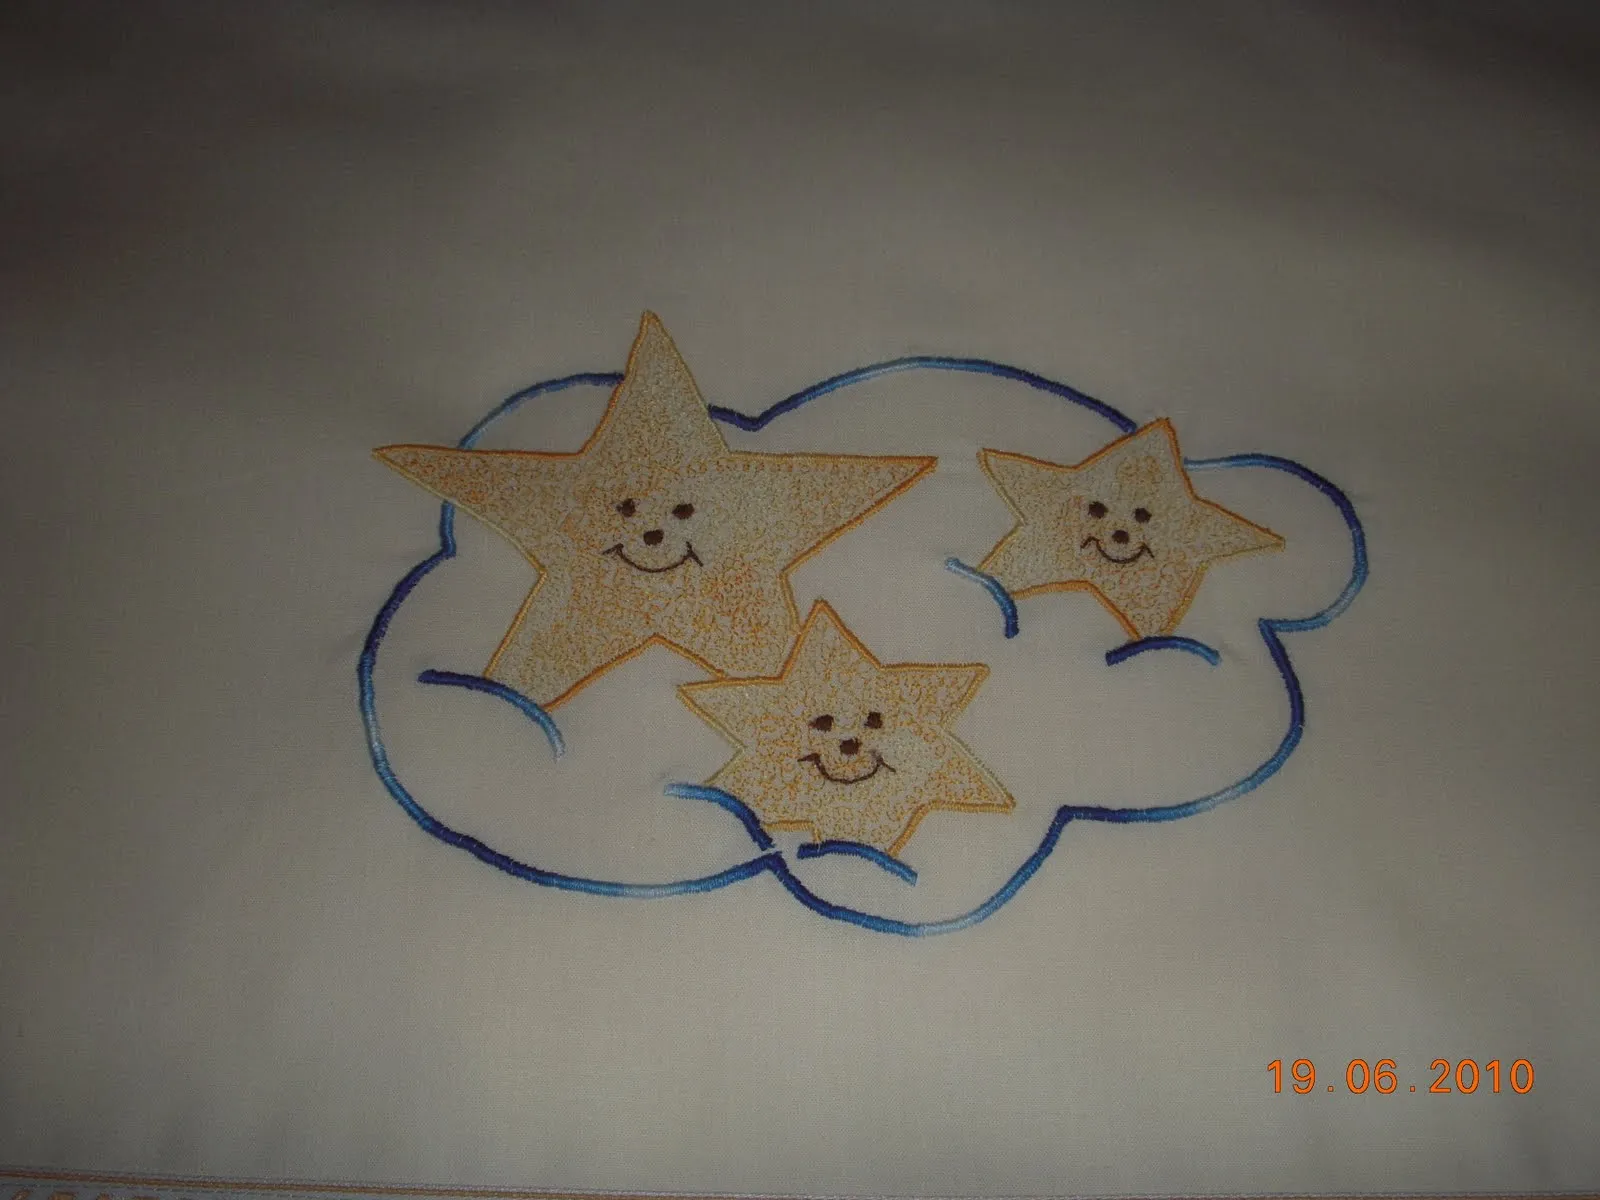 Dibujos para bordar sabanas de bebé - Imagui